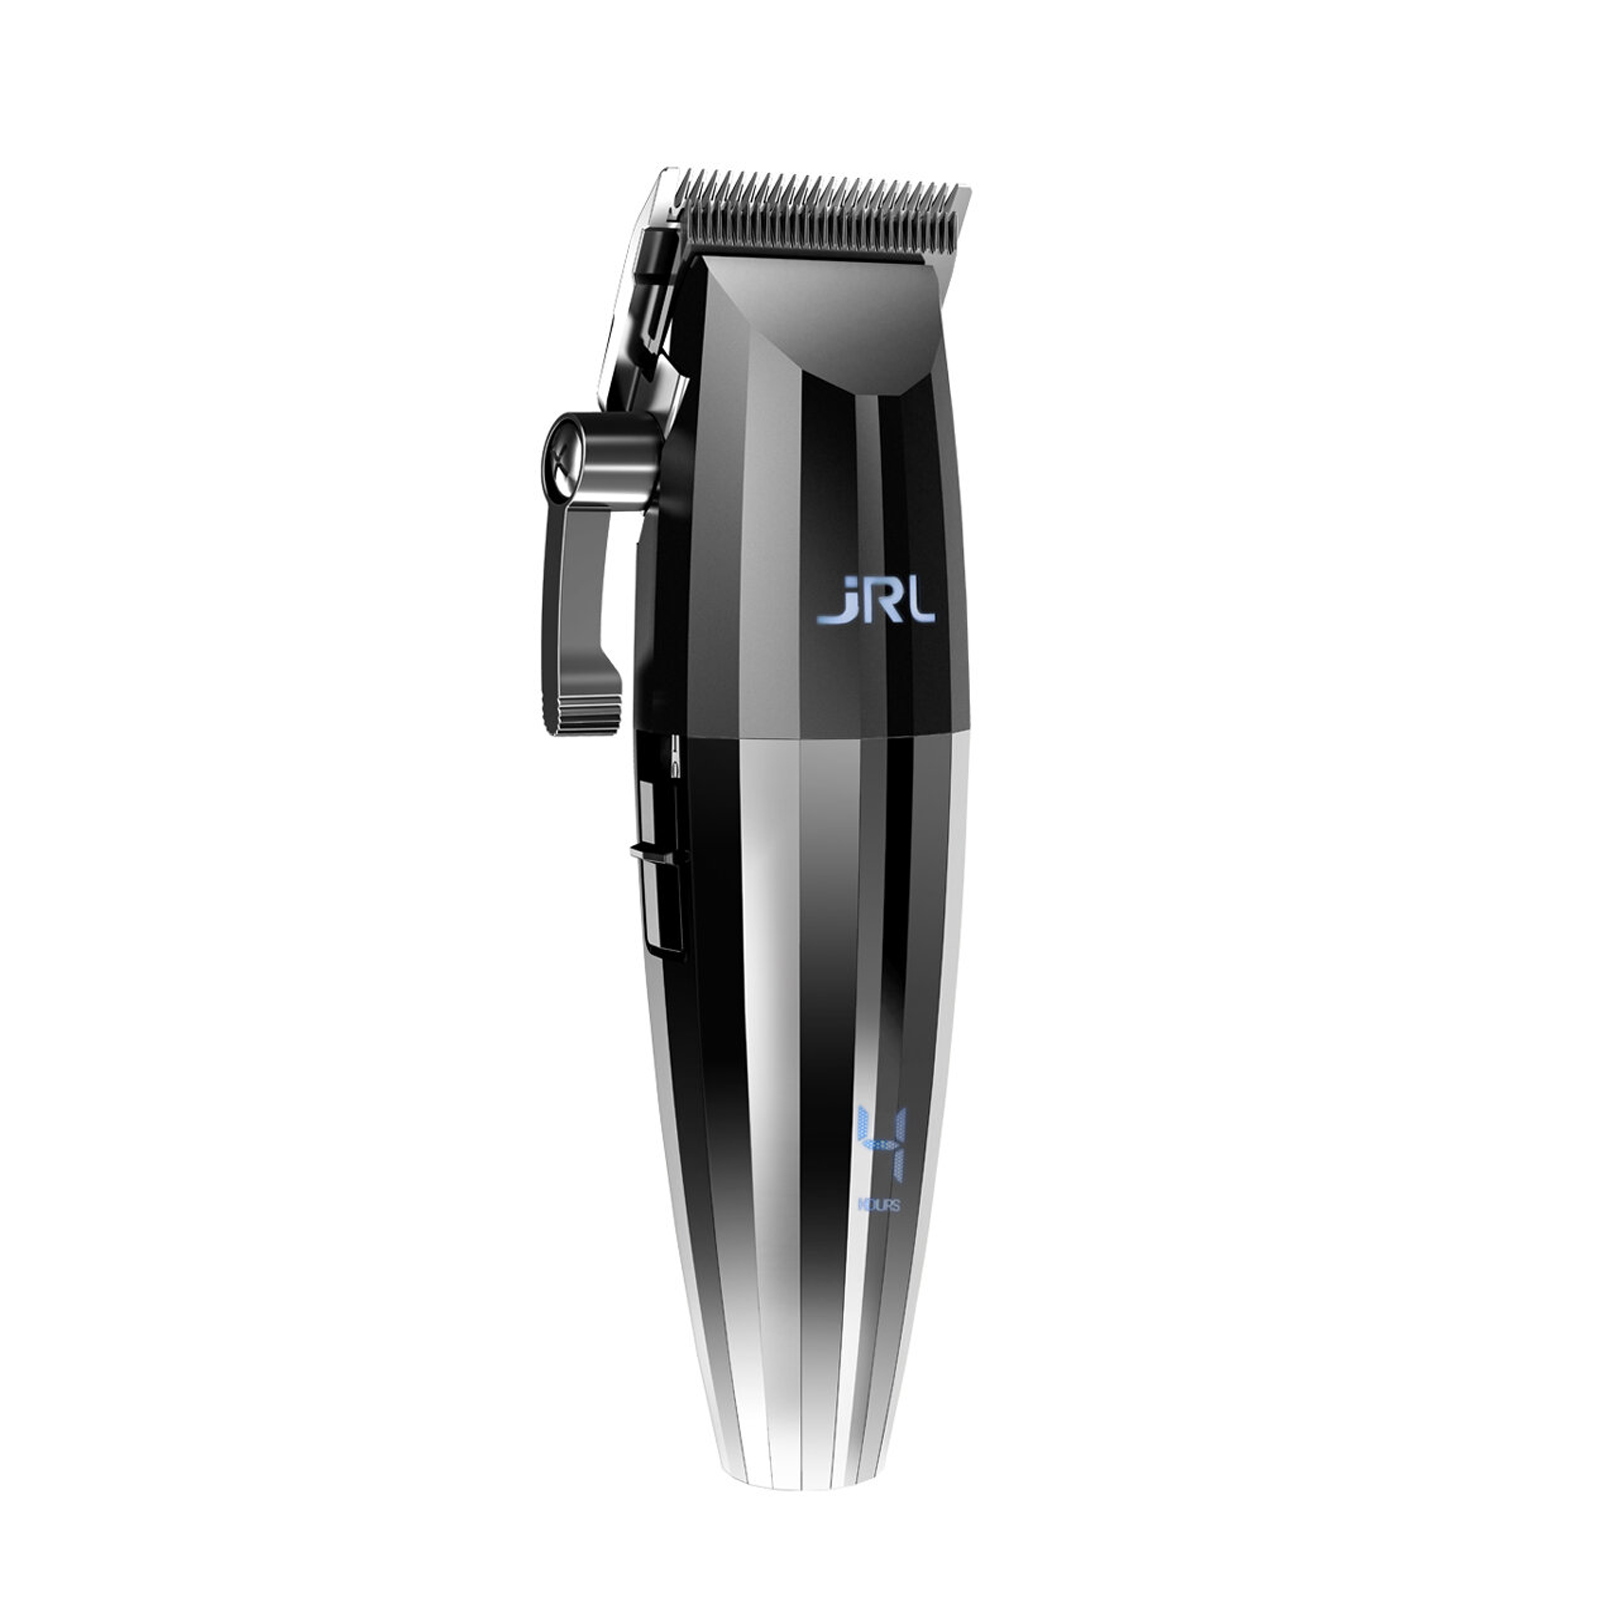 JRL Professional FreshFade FF2020C Silver Cordless Hair Clipper – Elegant  Barber Zone